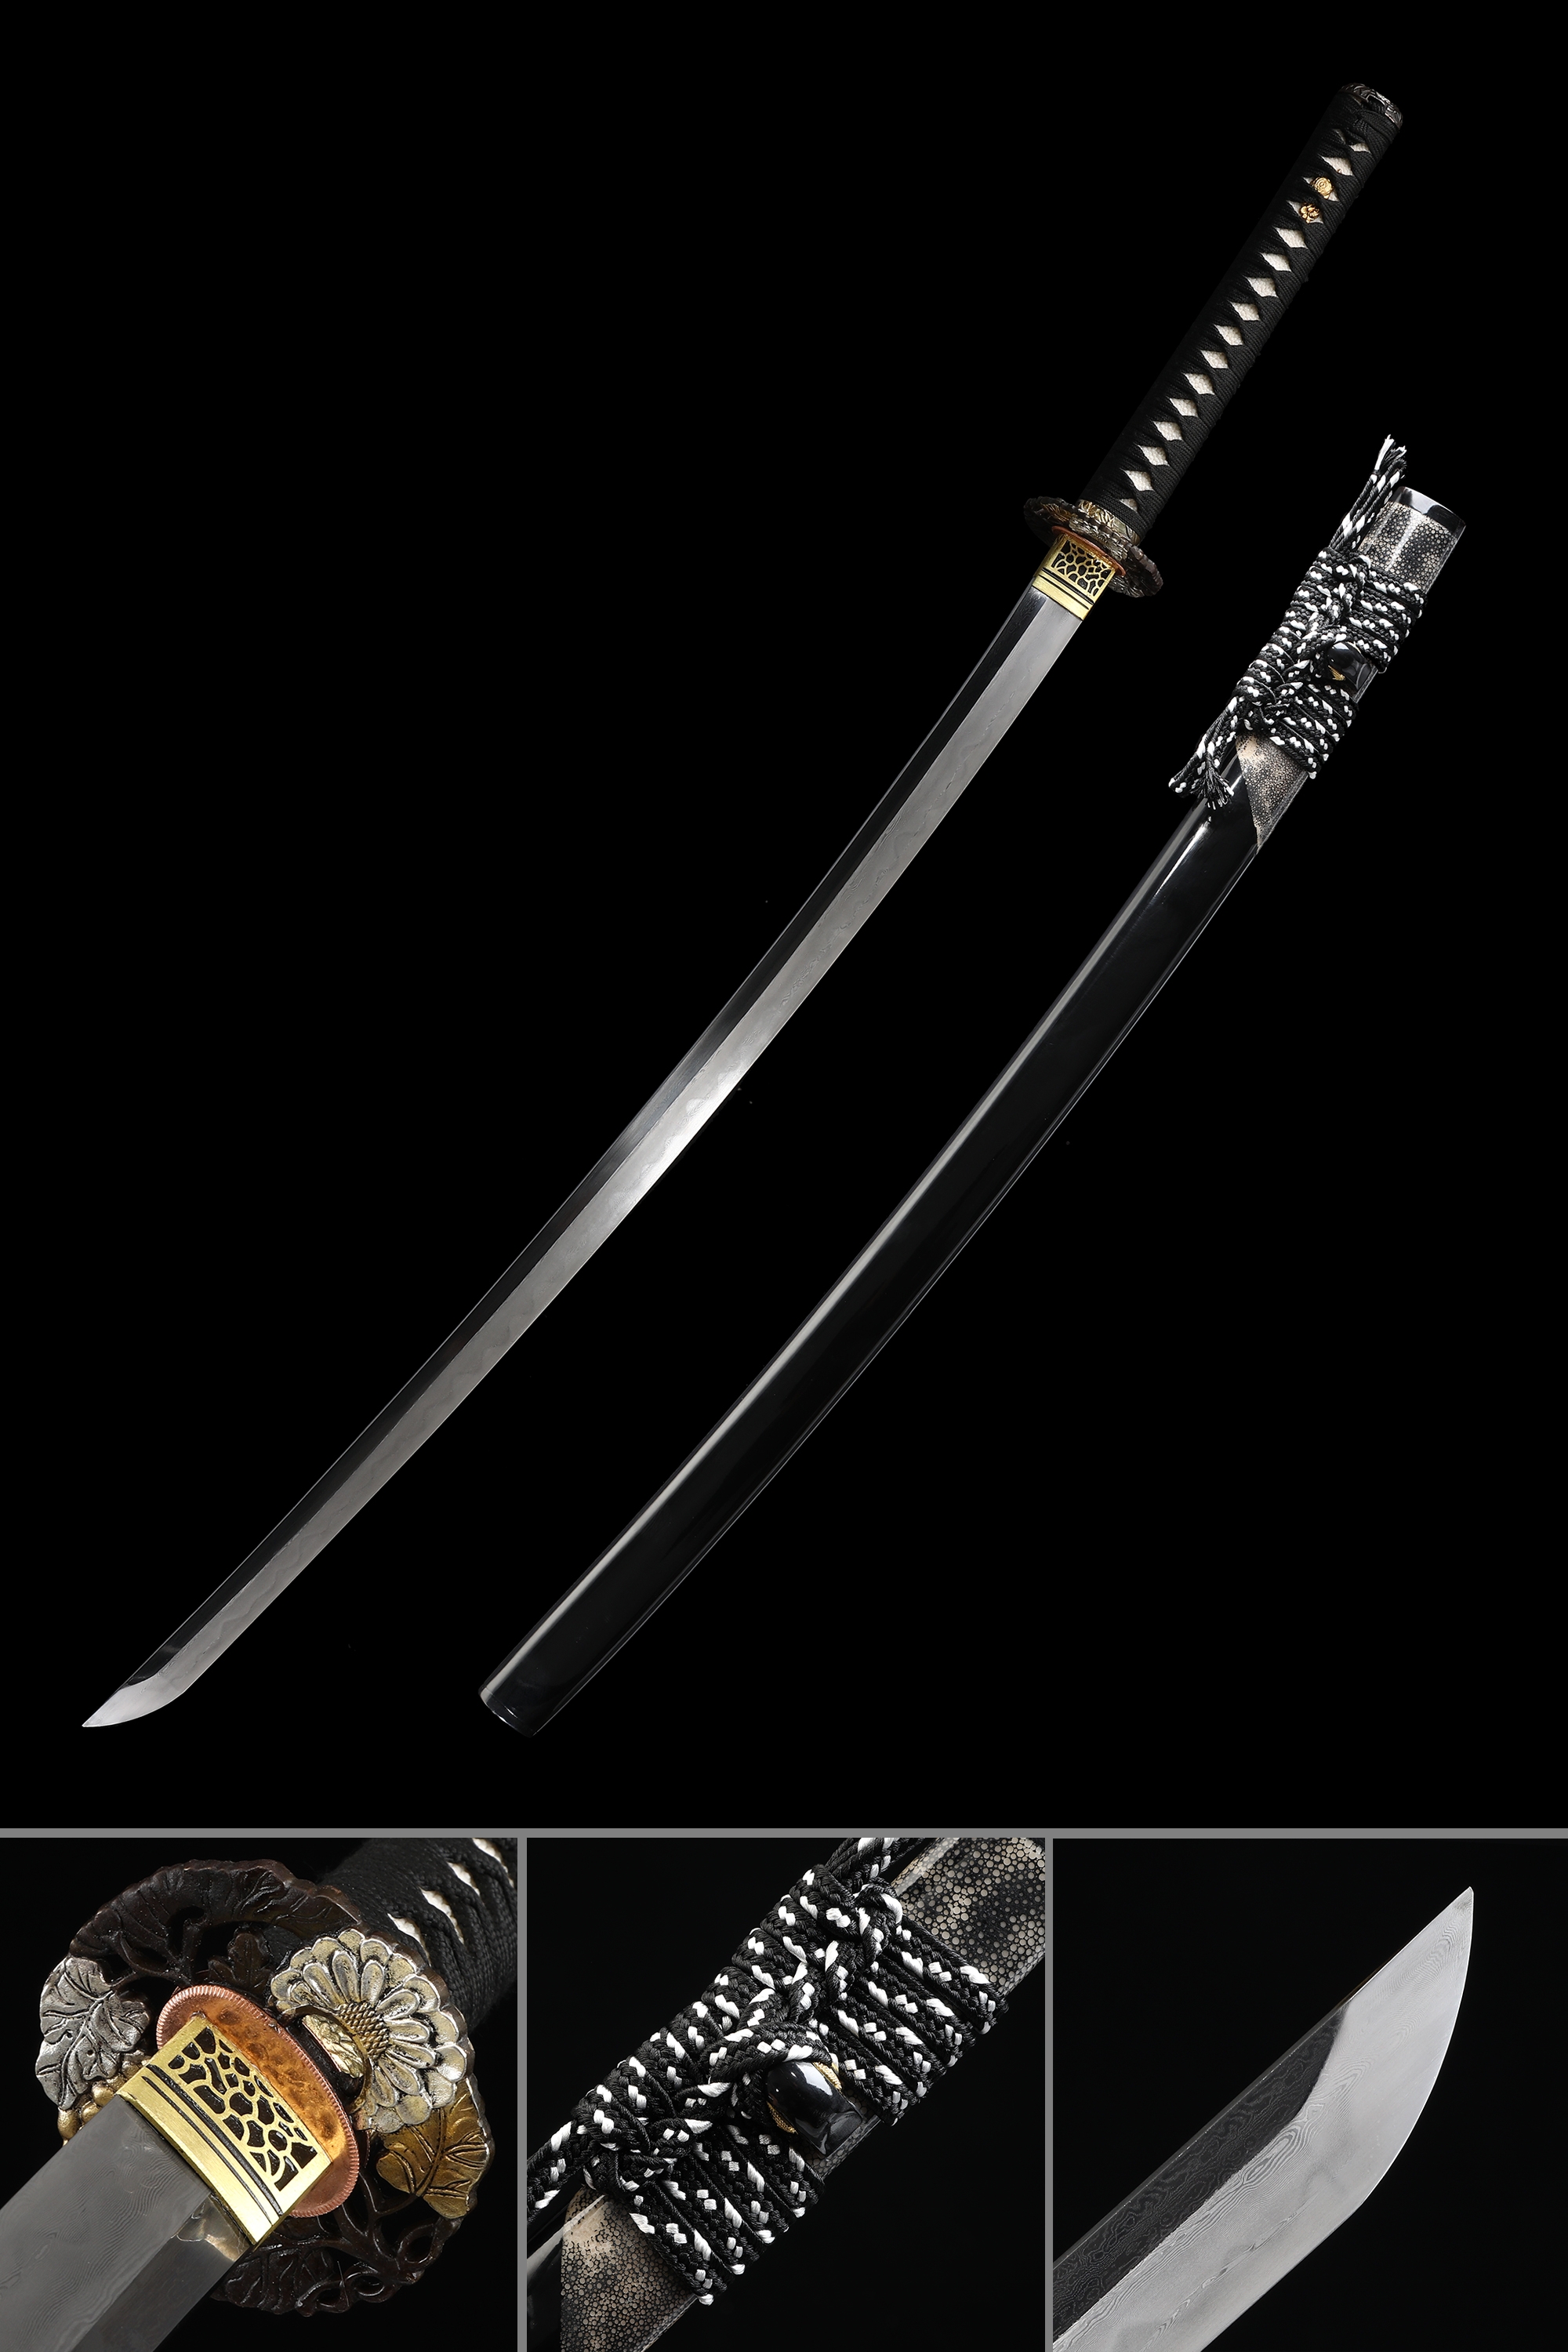 Details about   Battle ready Sharp Japanese Katana Samurai Sword High Carbon Steel blade #3253 